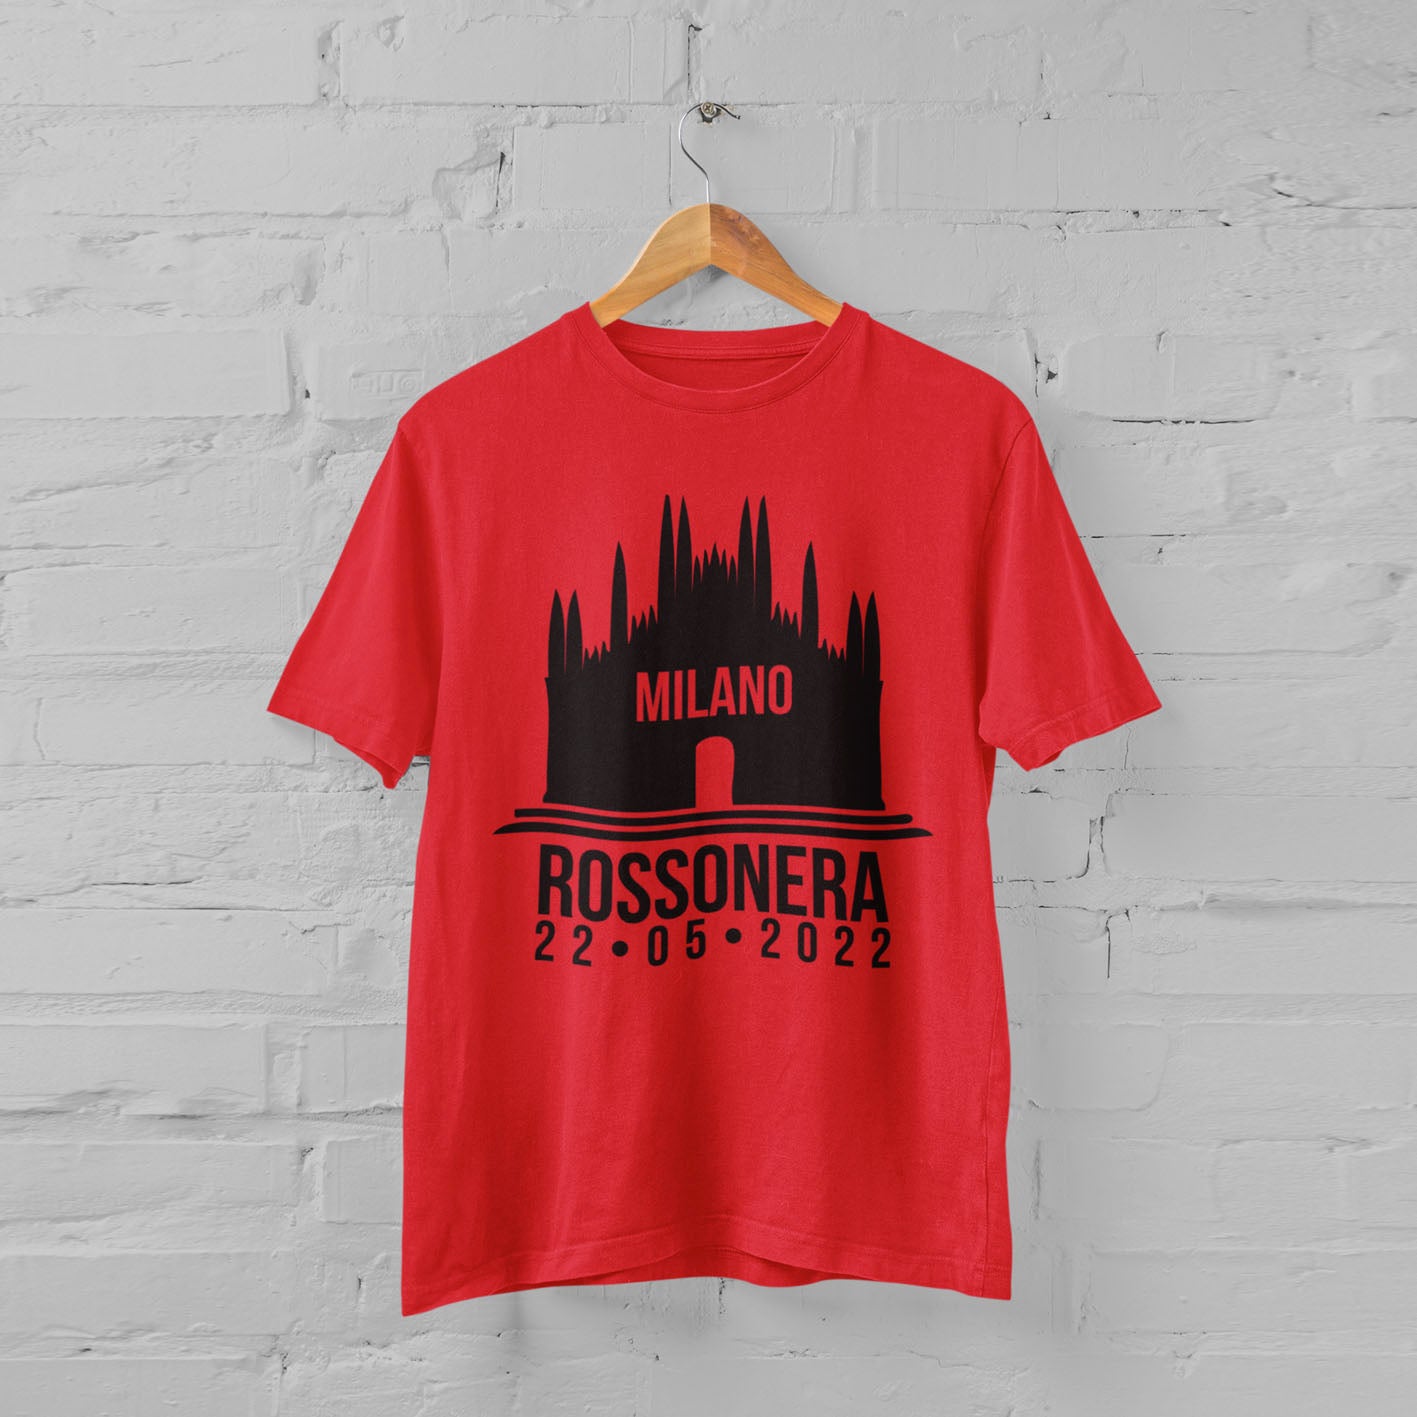 Milan T-shirt - Milano Rossonera